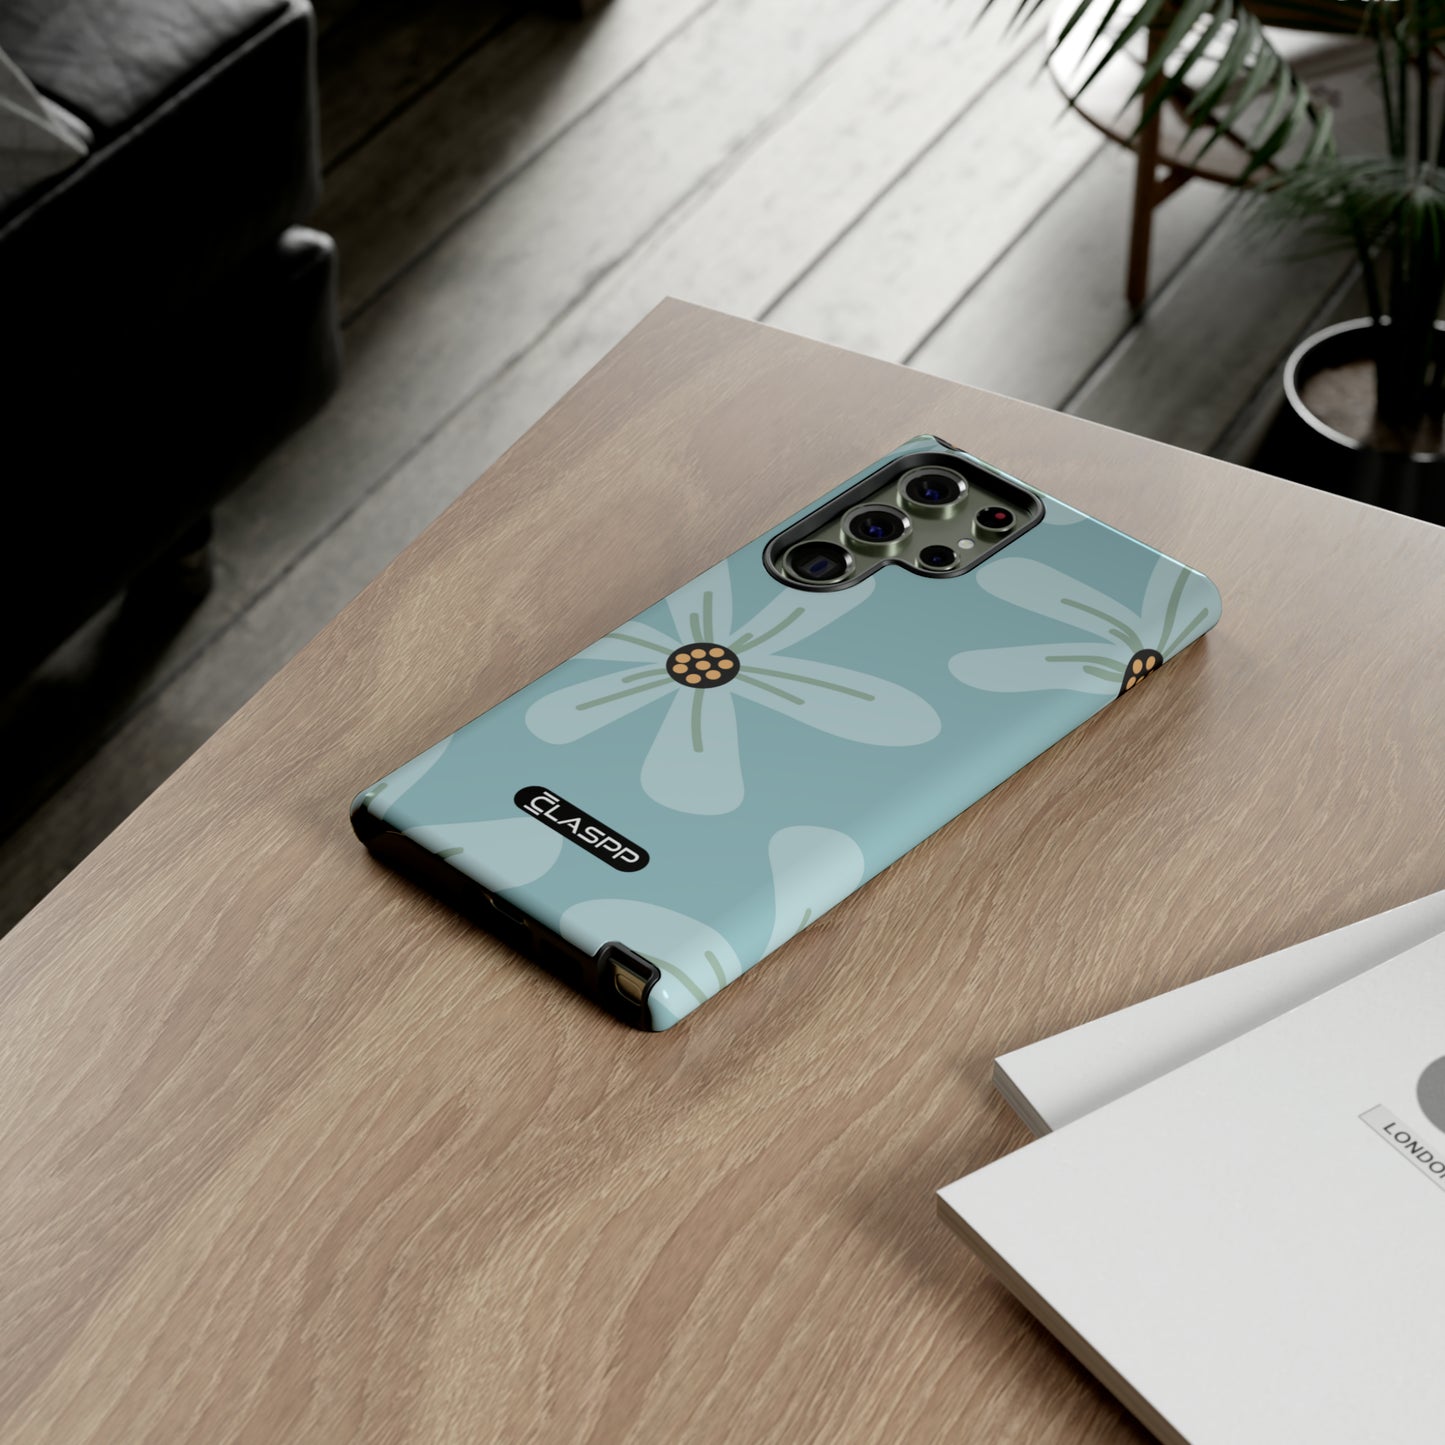 Placid Blue | Hardshell Dual Layer Phone Case